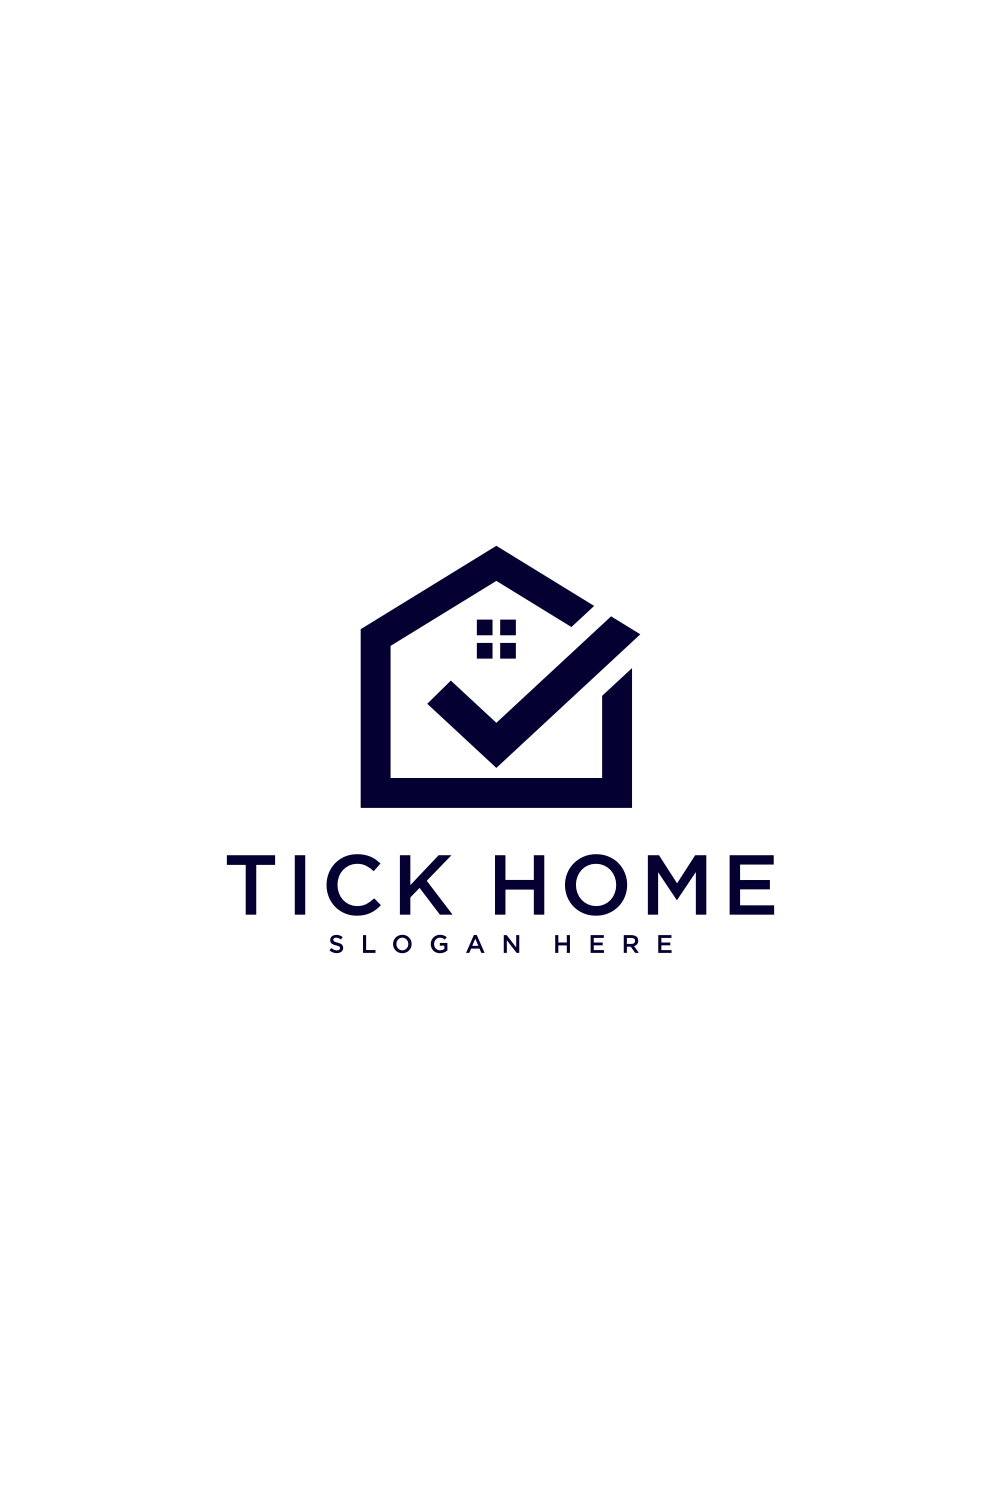 Tick House Logo Design Vector Template pinterest image.